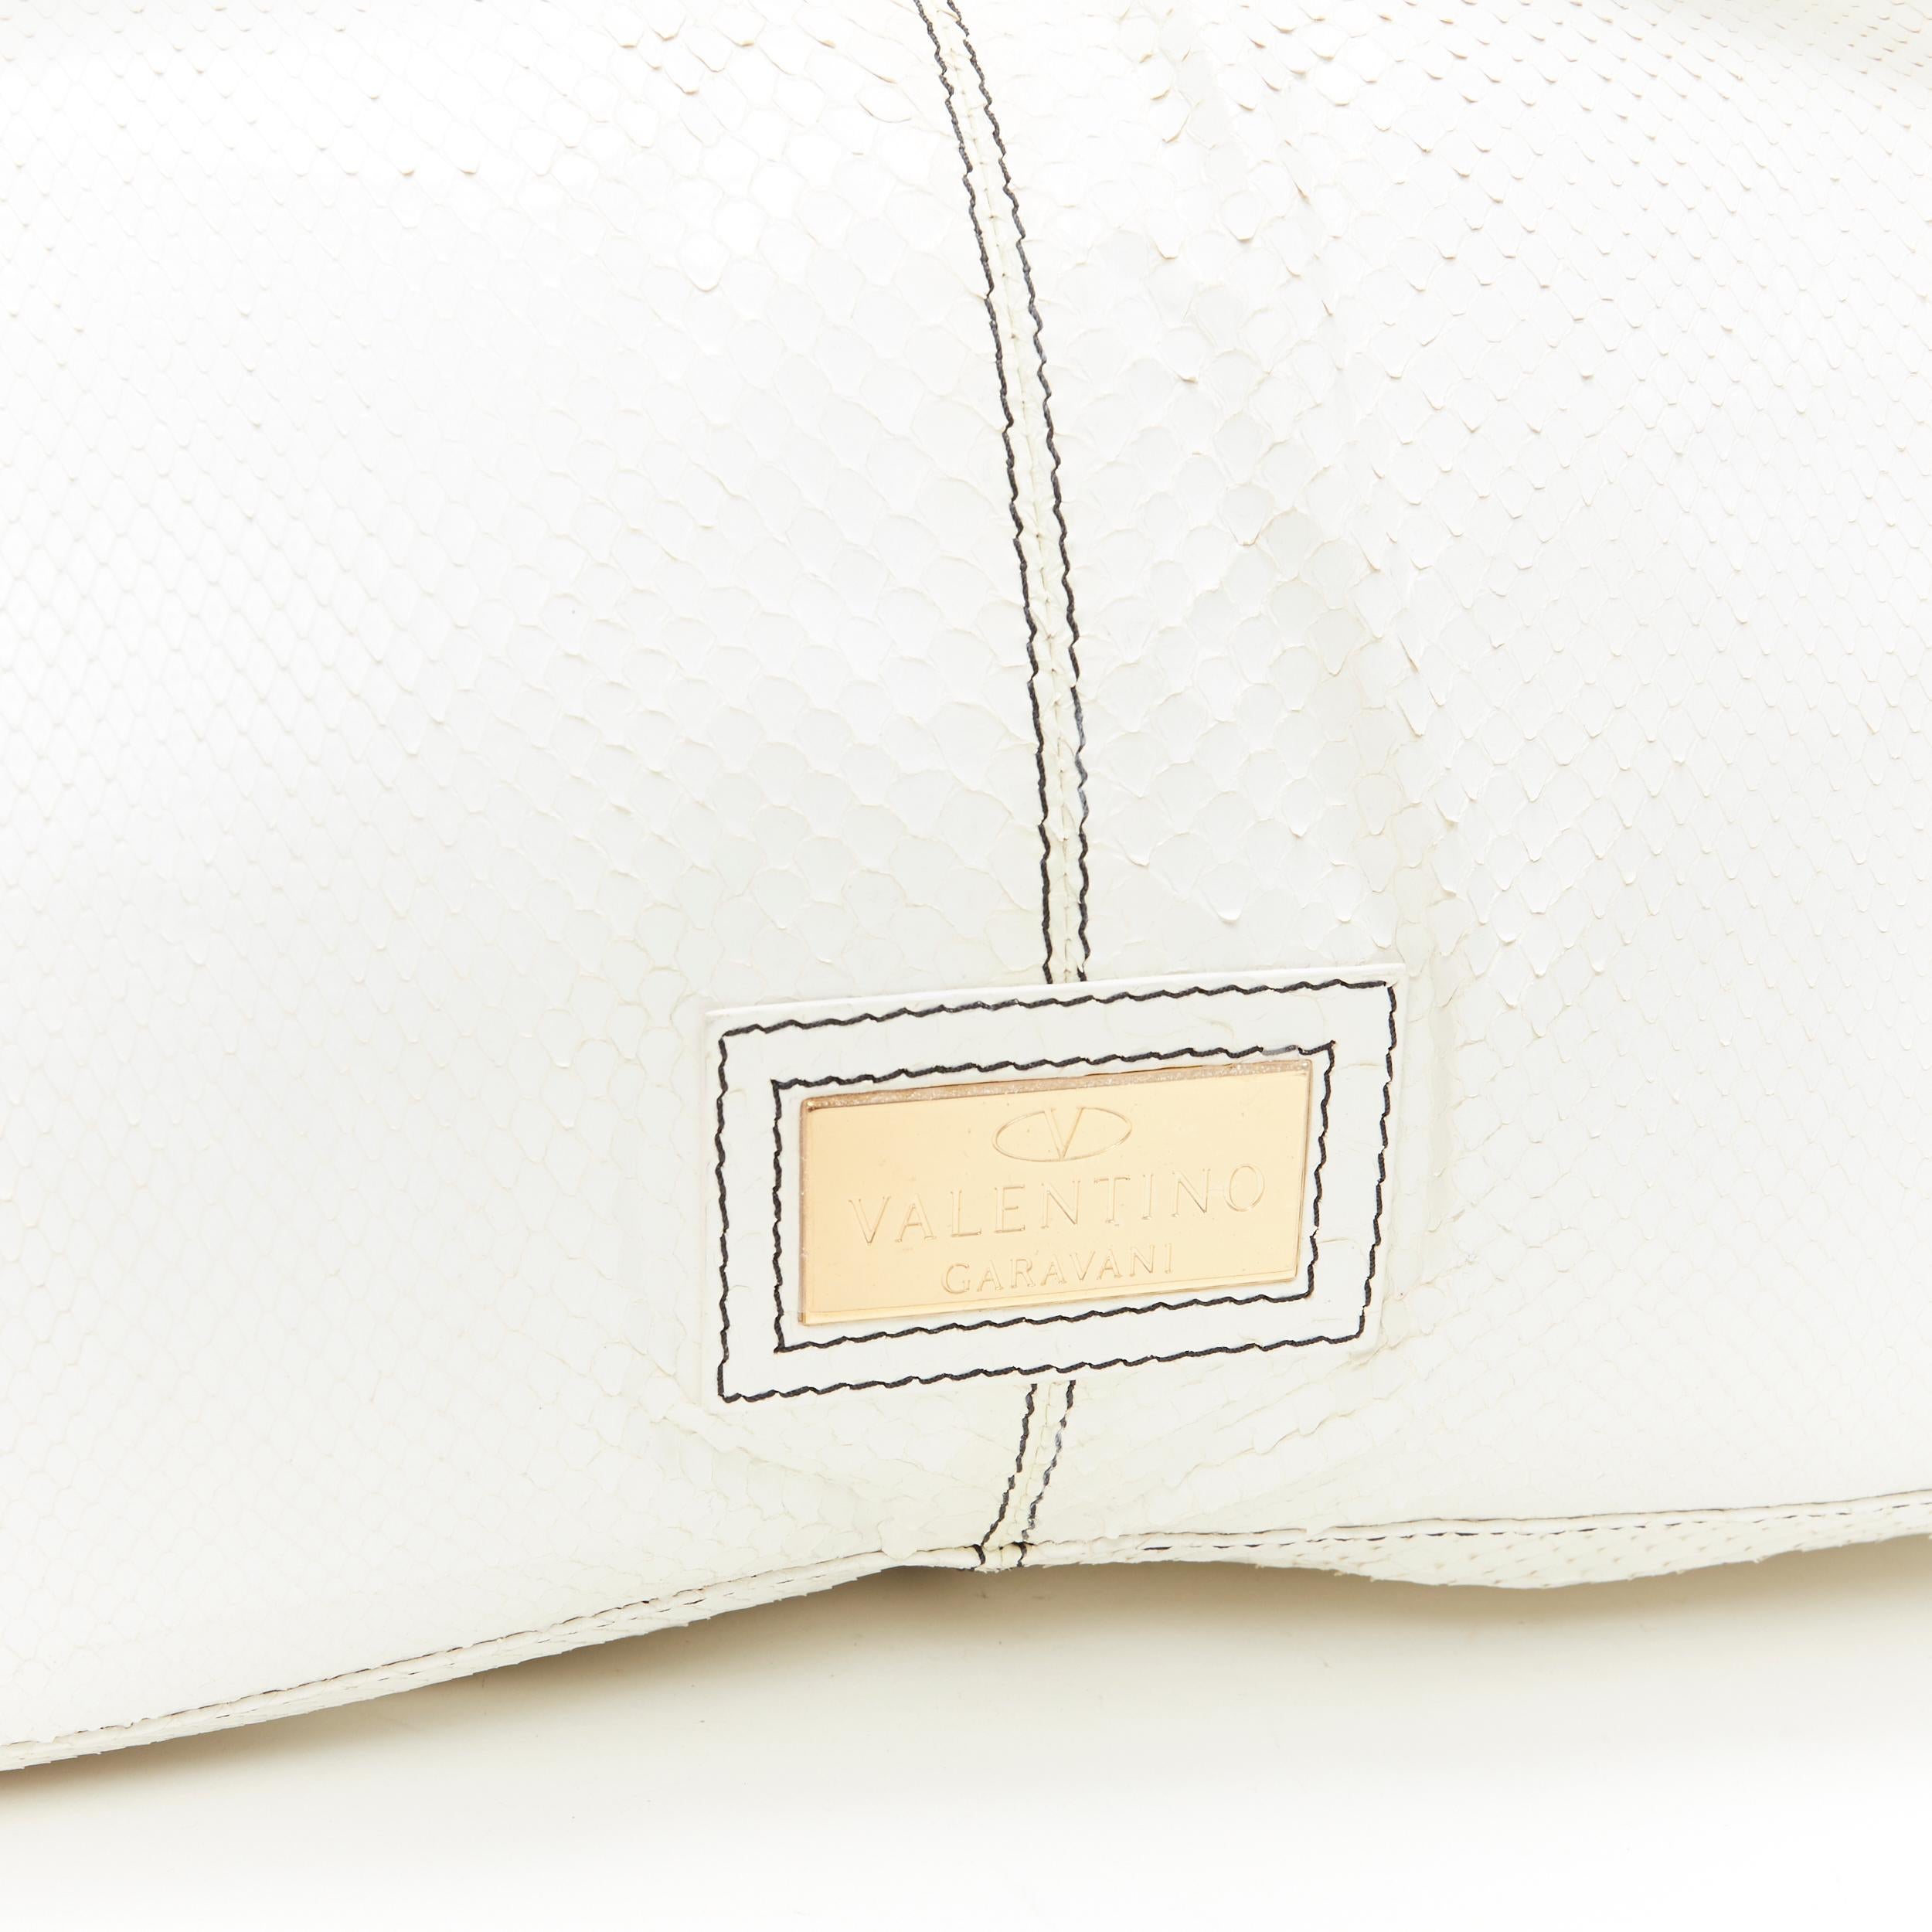 VALENTINO GARAVANI white scaled leather large box top handle large hobo bag 1